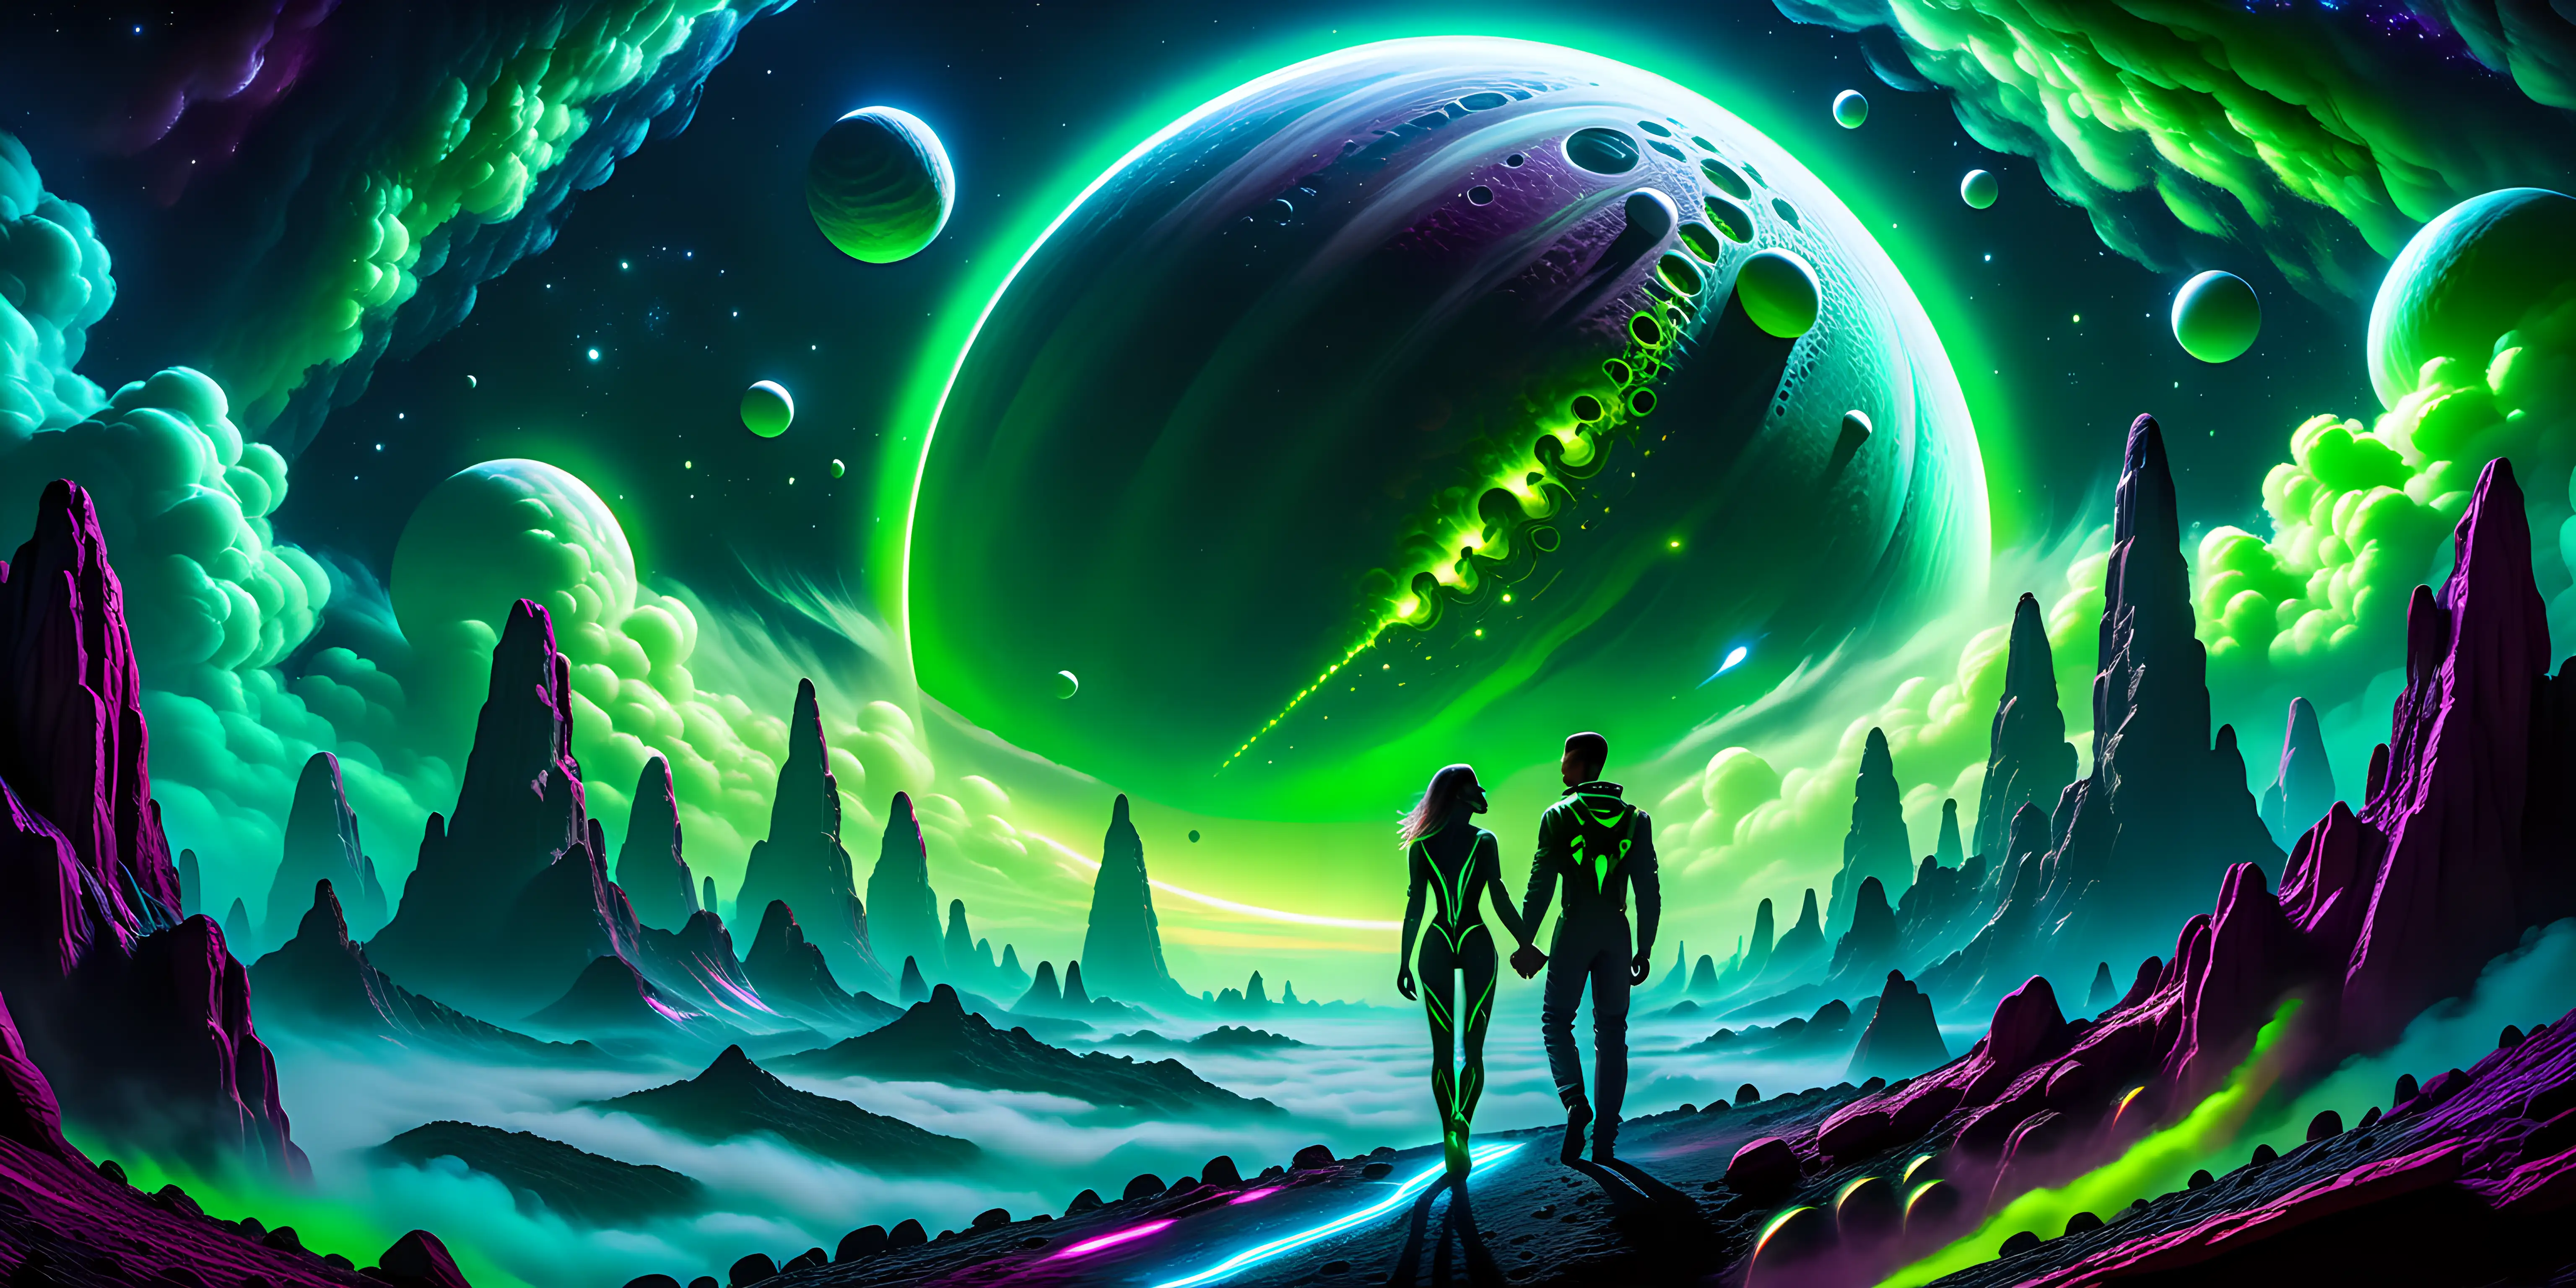 Extraterrestrial Love Cosmic Graffiti in Vibrant Neon Green